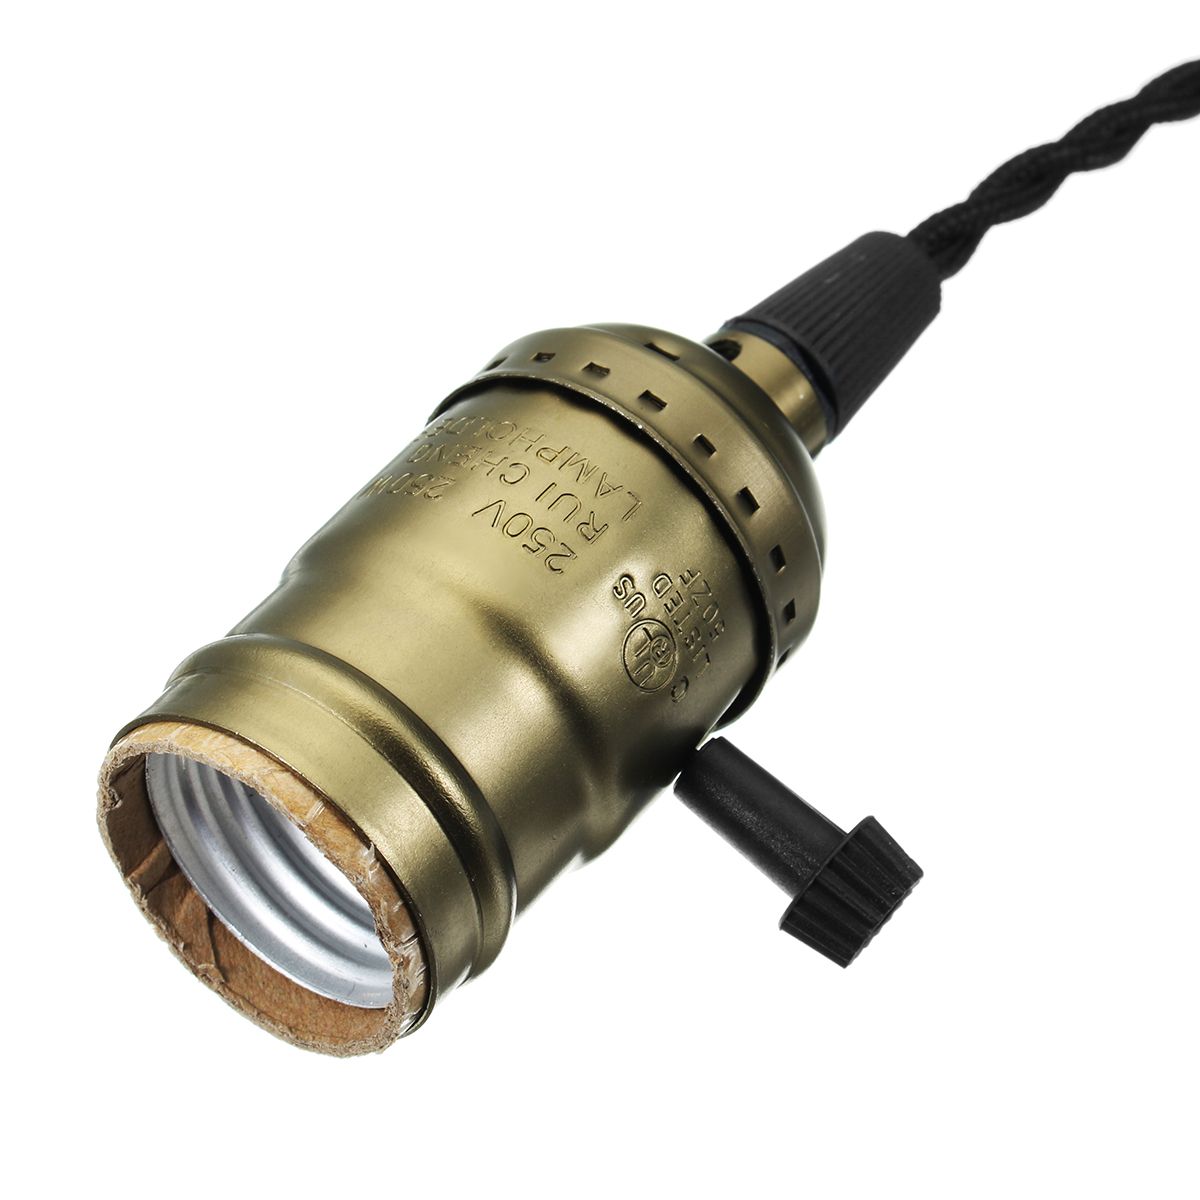 E27-4M-Vintage-Copper-Bulb-Adapter-Base-Socket-Lamp-Holder-with-Dimmer-Switch-US-Plug-1287282